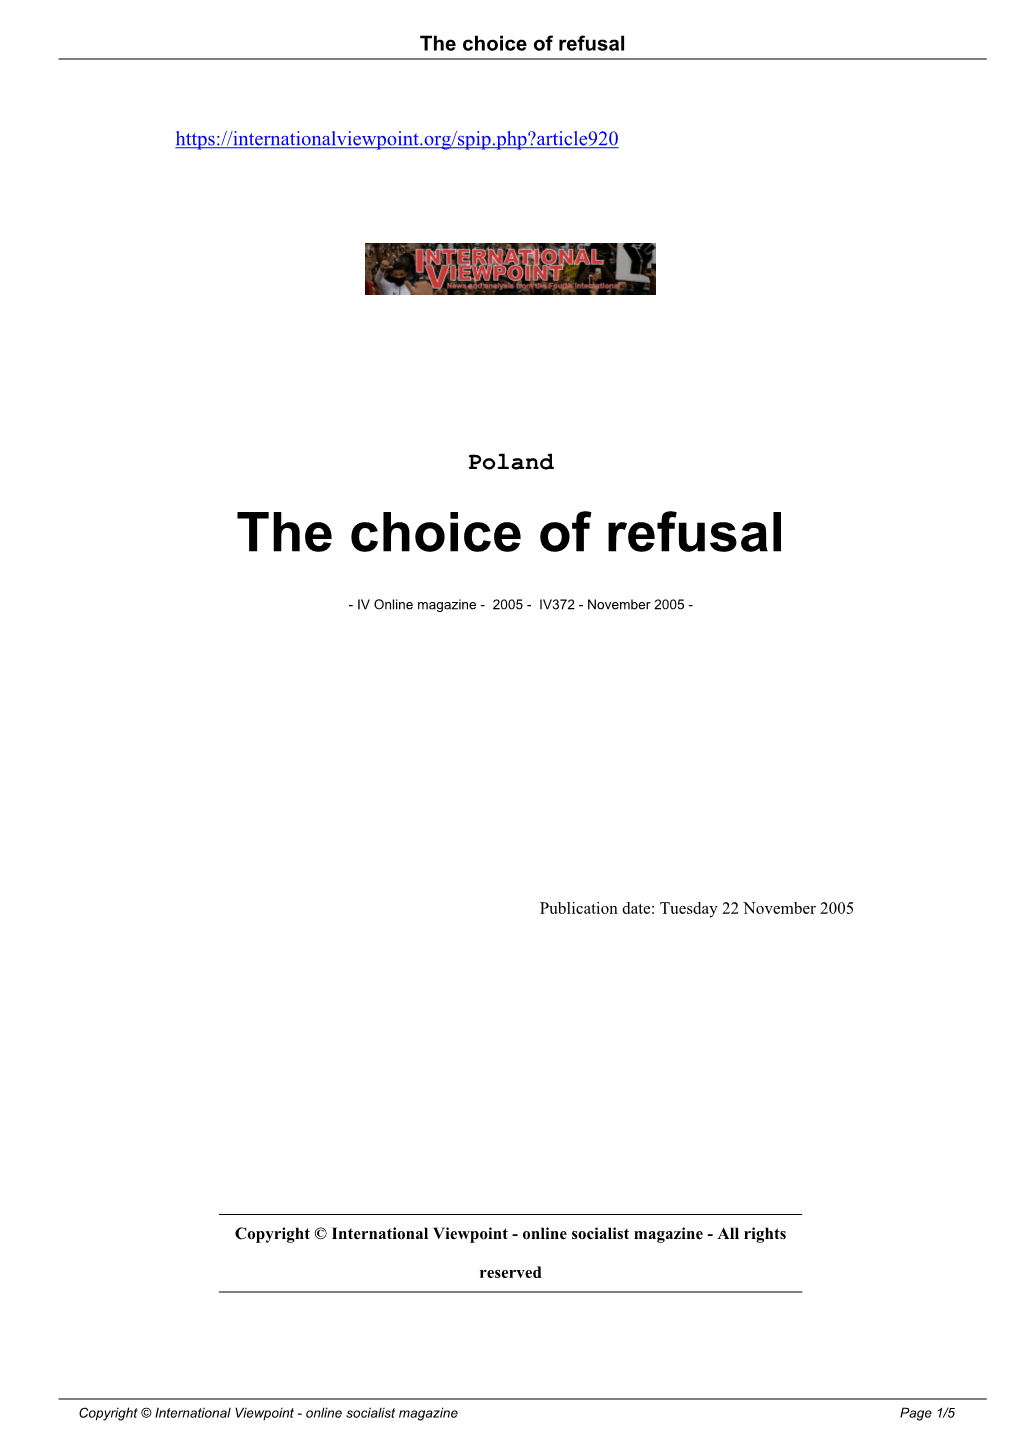 The Choice of Refusal